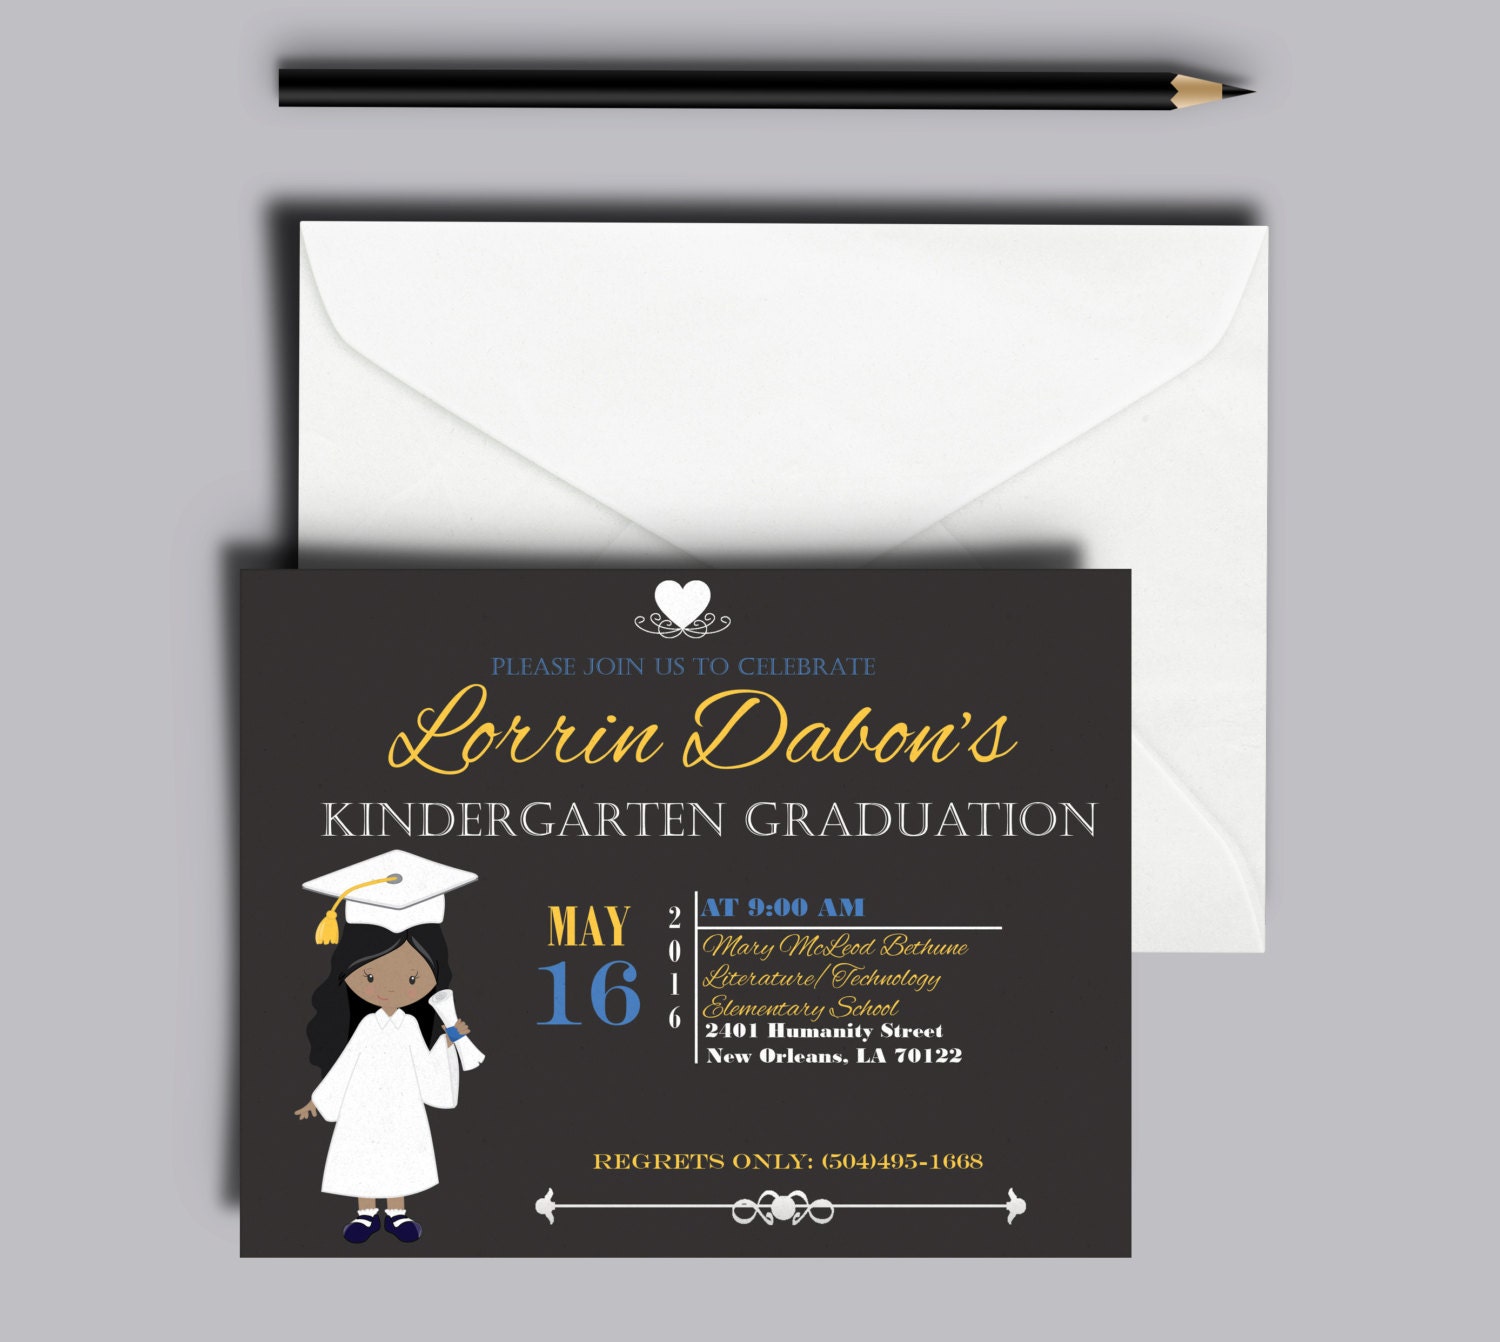 invitation card template free download graduation